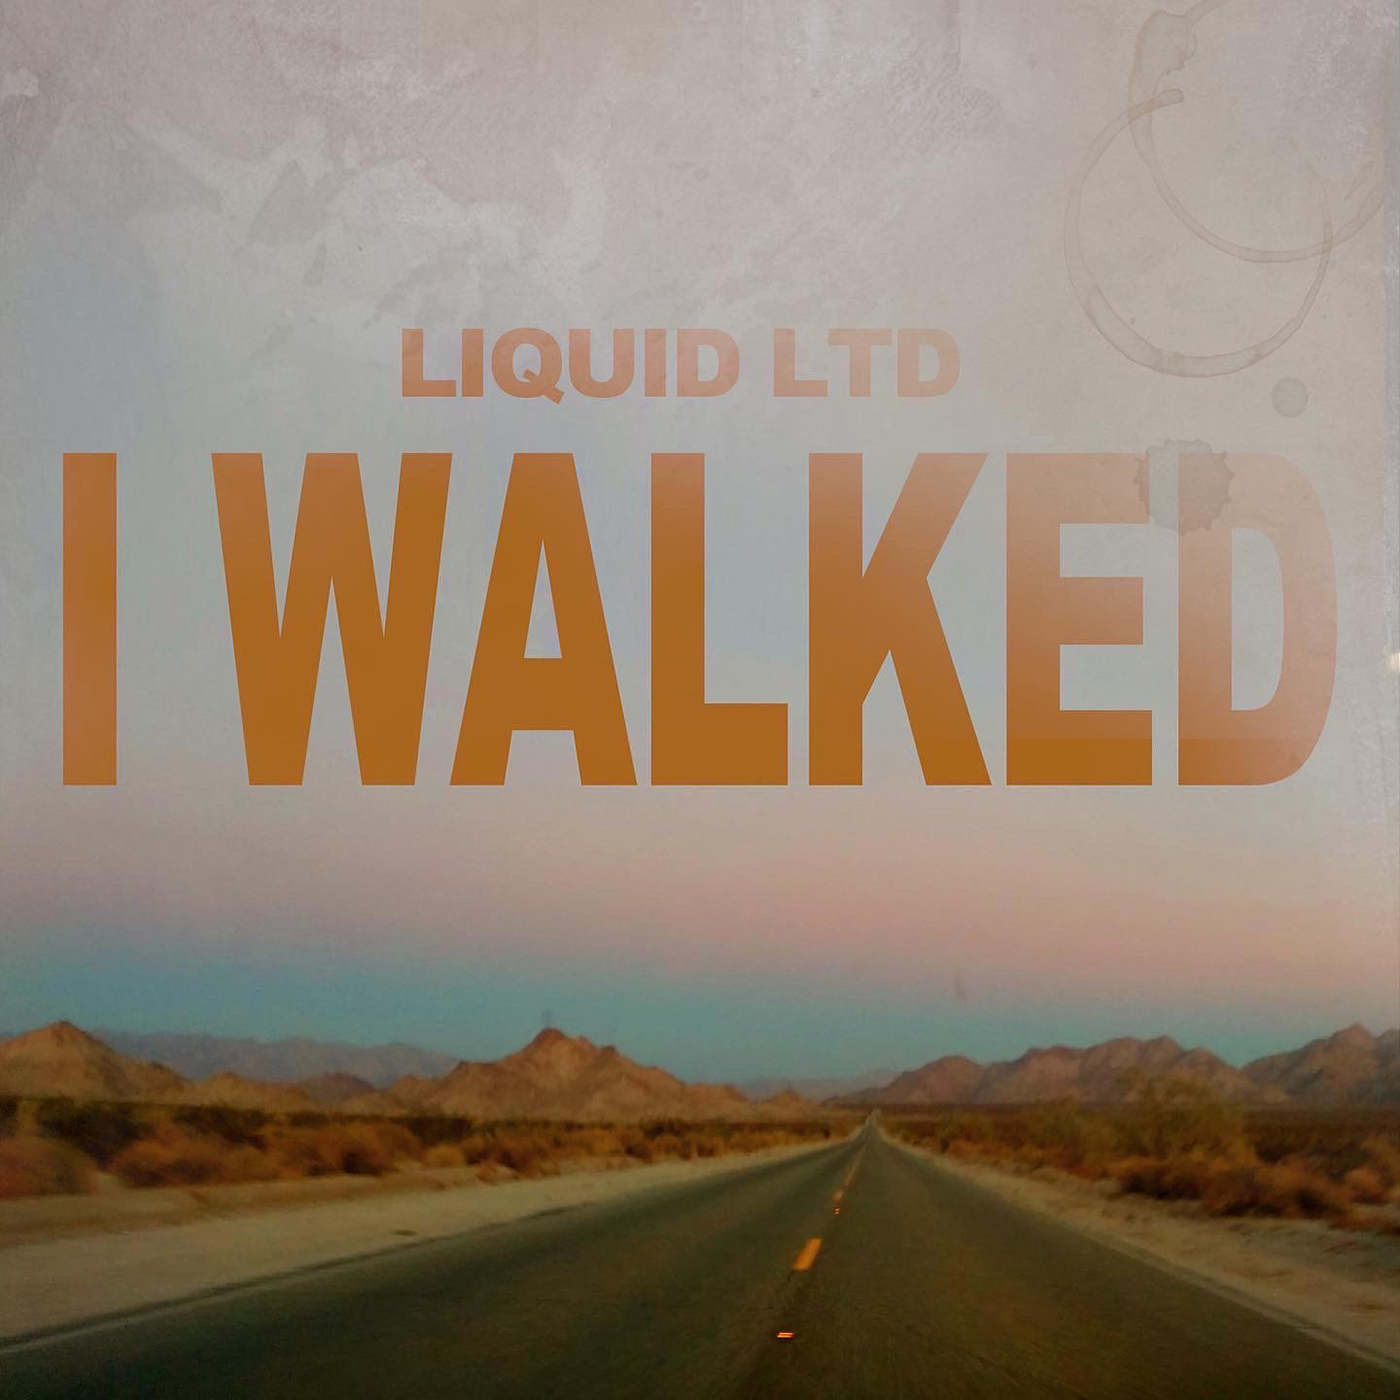 Liquid Ltd ‘I Walked’ Single Artwork